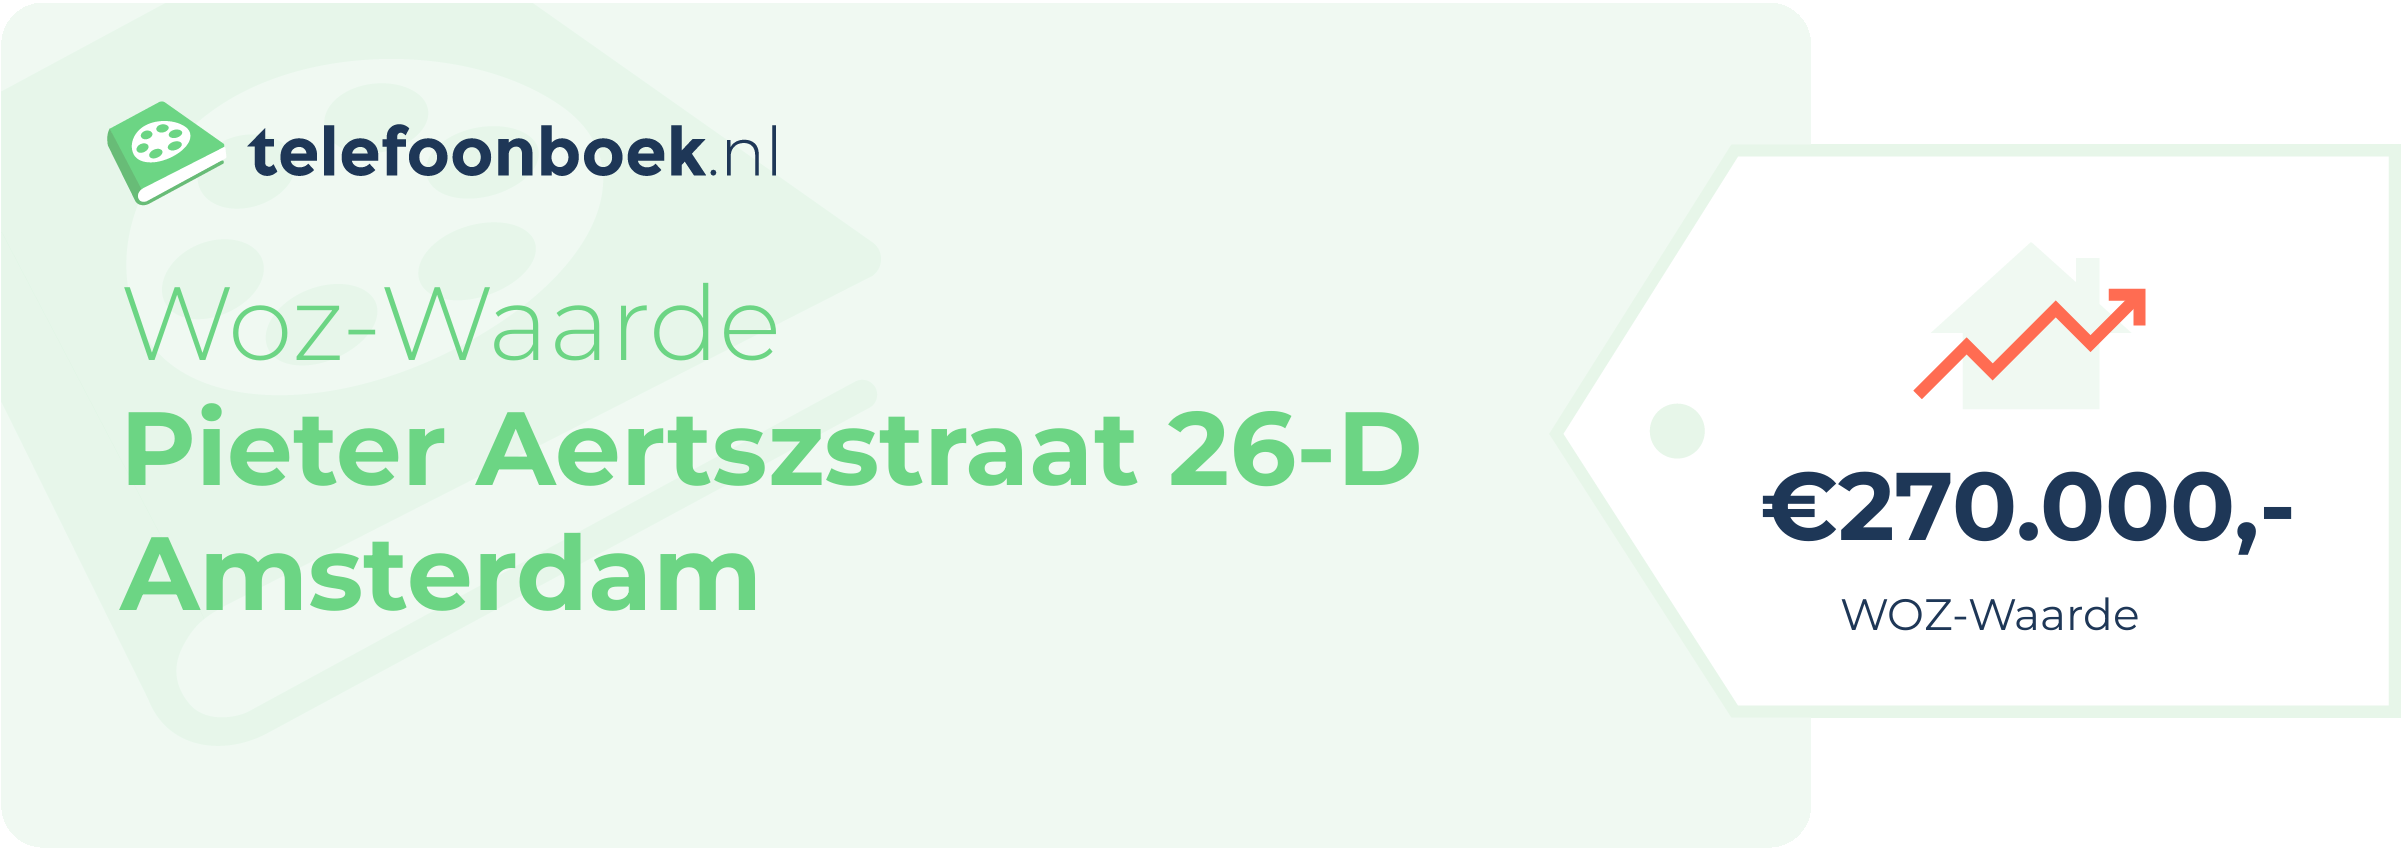 WOZ-waarde Pieter Aertszstraat 26-D Amsterdam